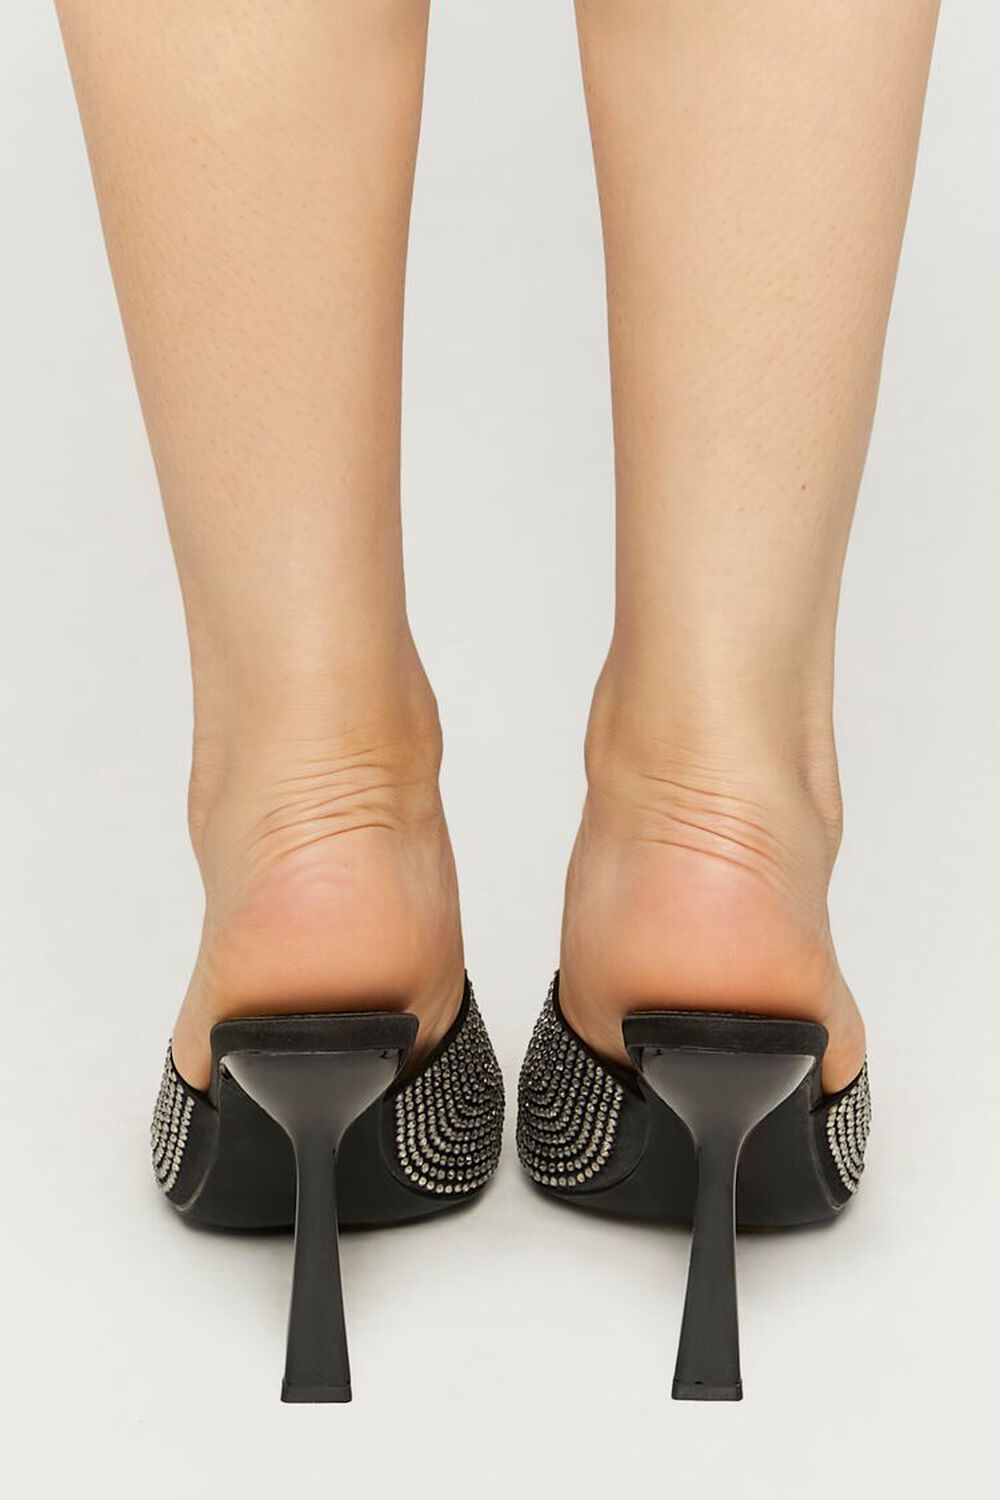 BLACK Rhinestone Stiletto High Heels, image 3